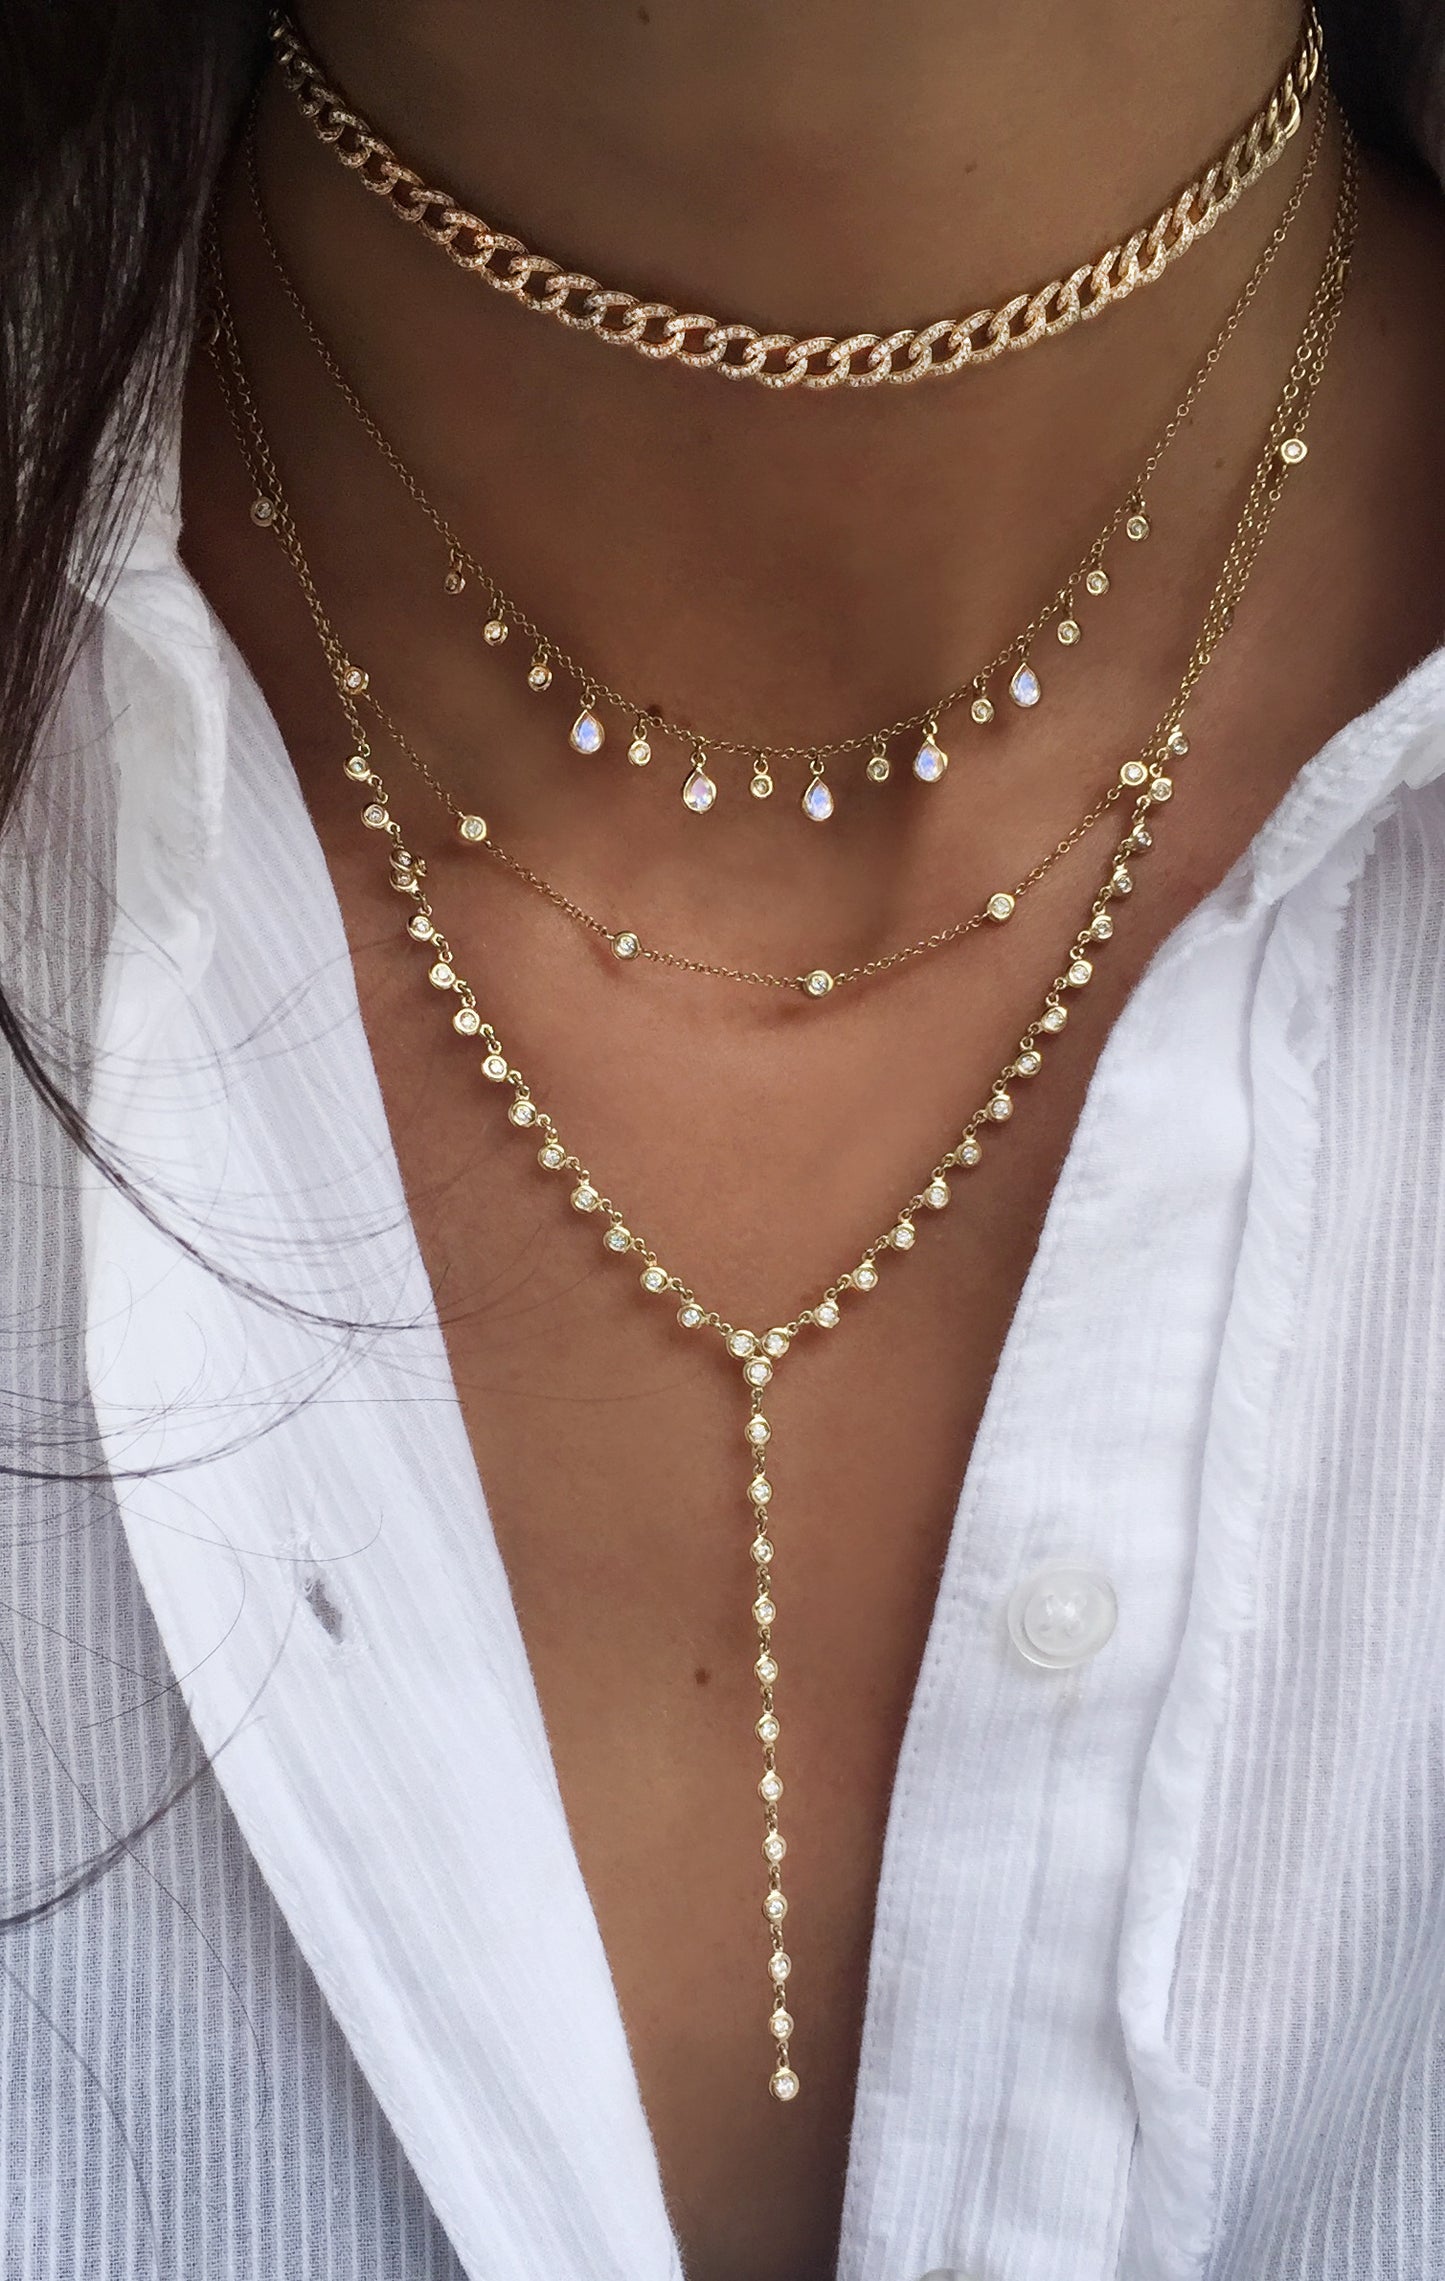 14kt gold and diamond baby chain link choker - Luna Skye